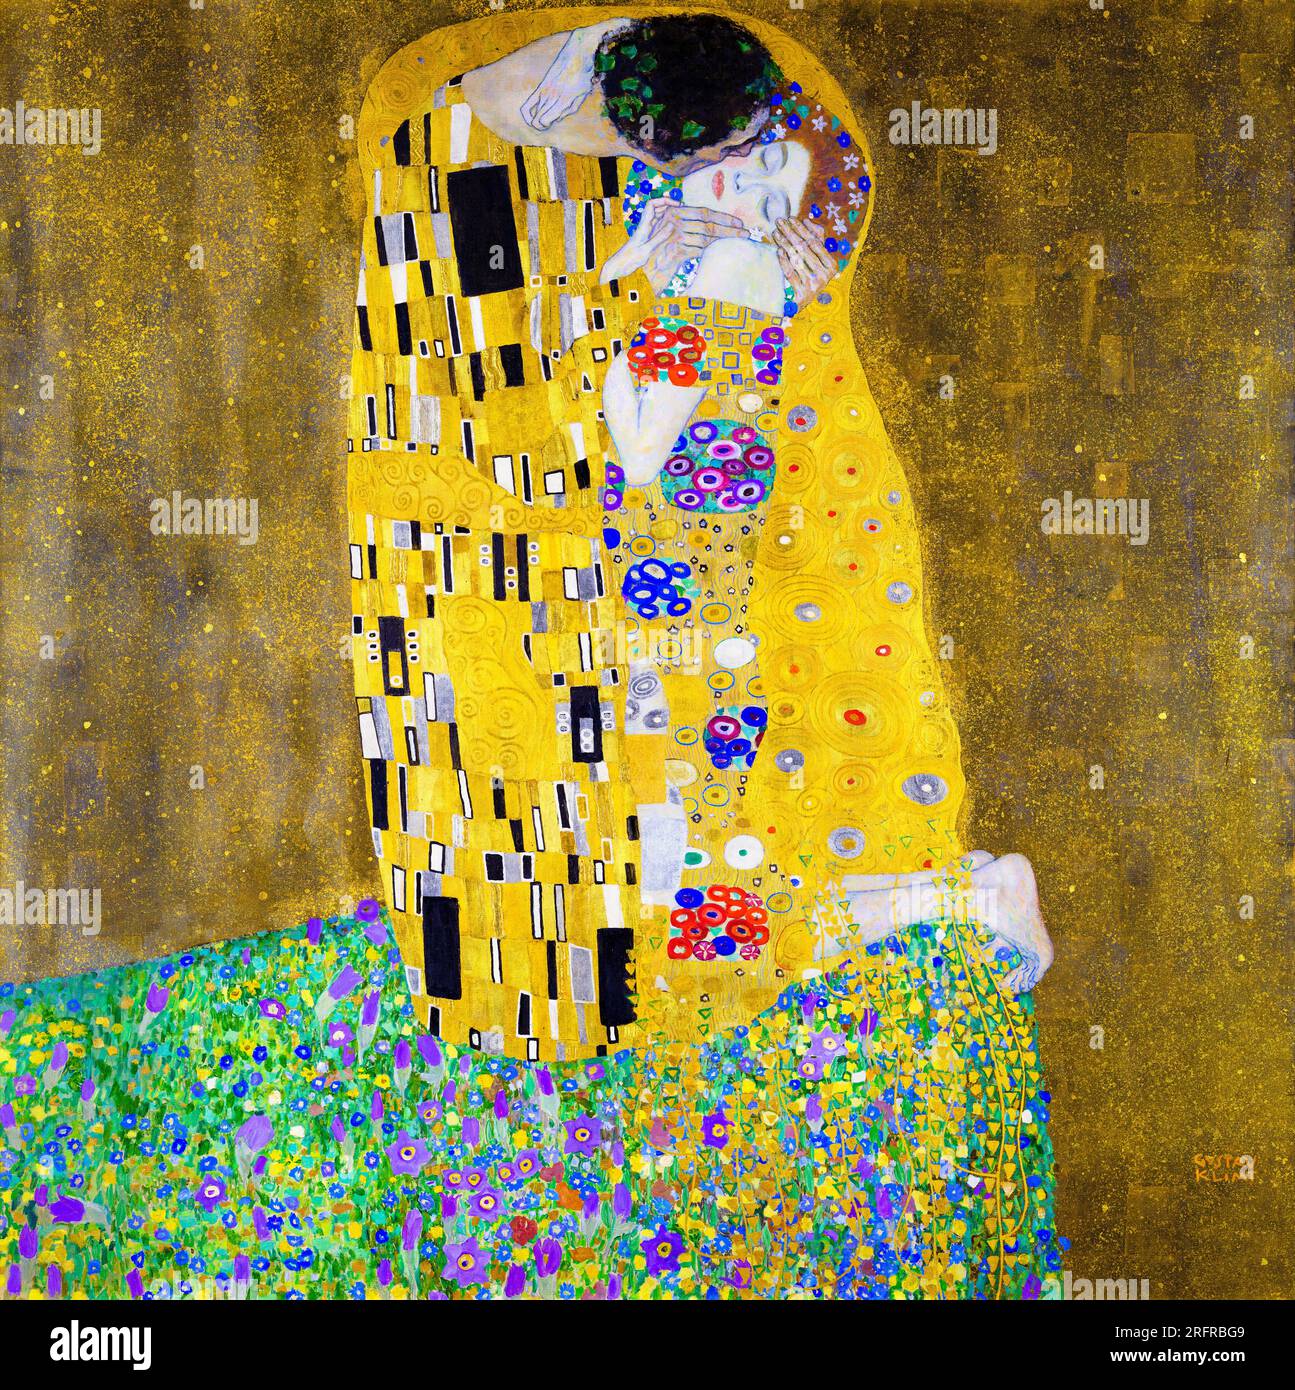 Il bacio, Klimt. Pittura ad olio su tela di Gustav Klimt, circa 1907 Foto Stock